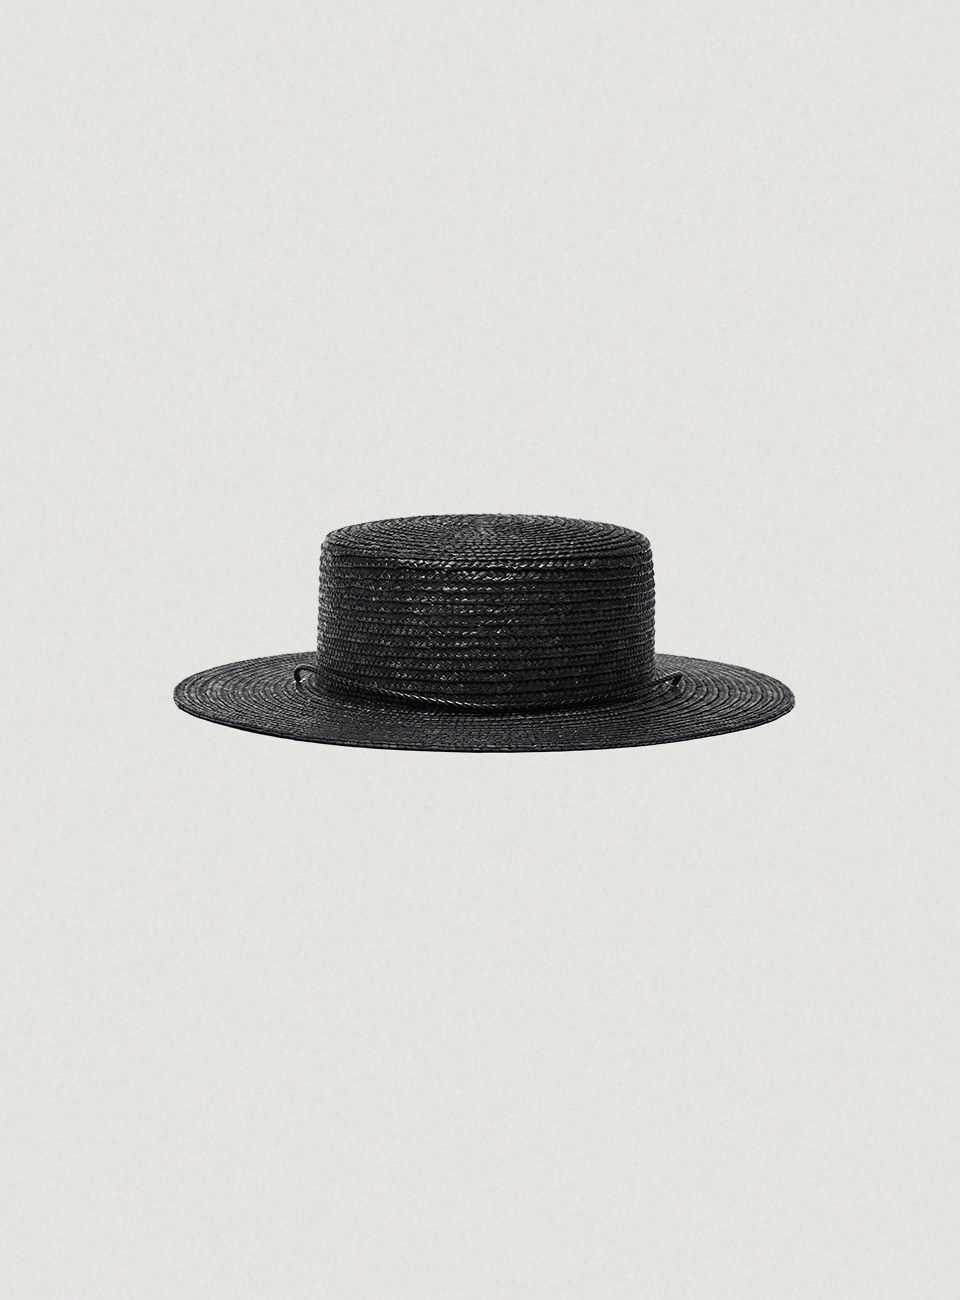 Straw Boater Hat by FERRUCCIO VECCHI [6/7부터 순차 배송]